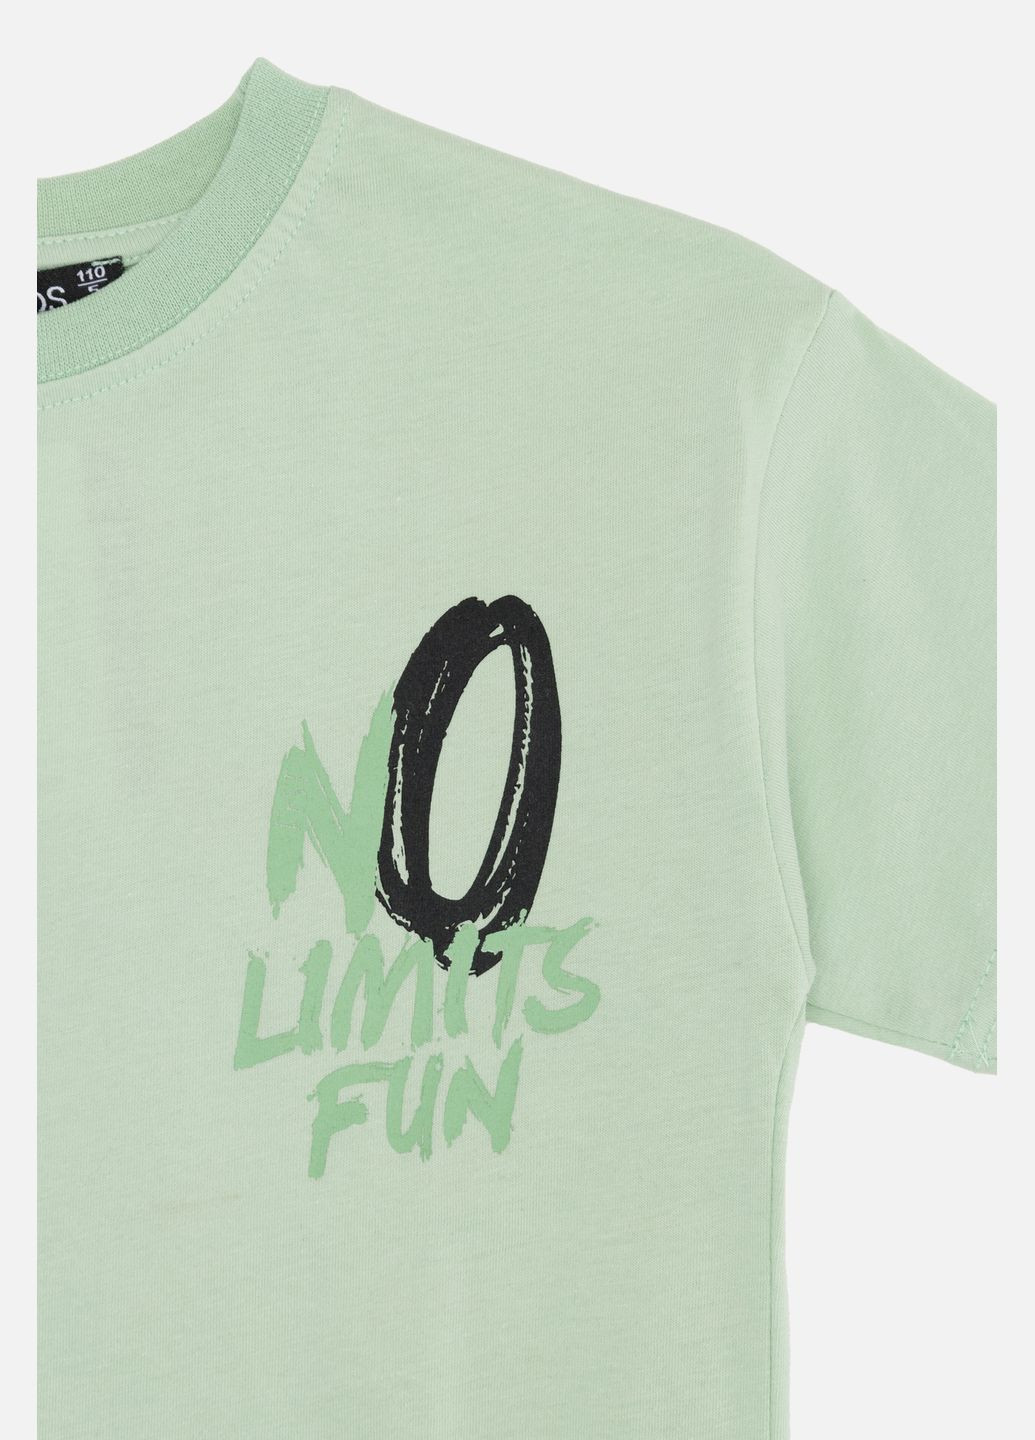 Оливковая летняя футболка с коротким рукавом для мальчика цвет оливковый цб-00246525 First Kids